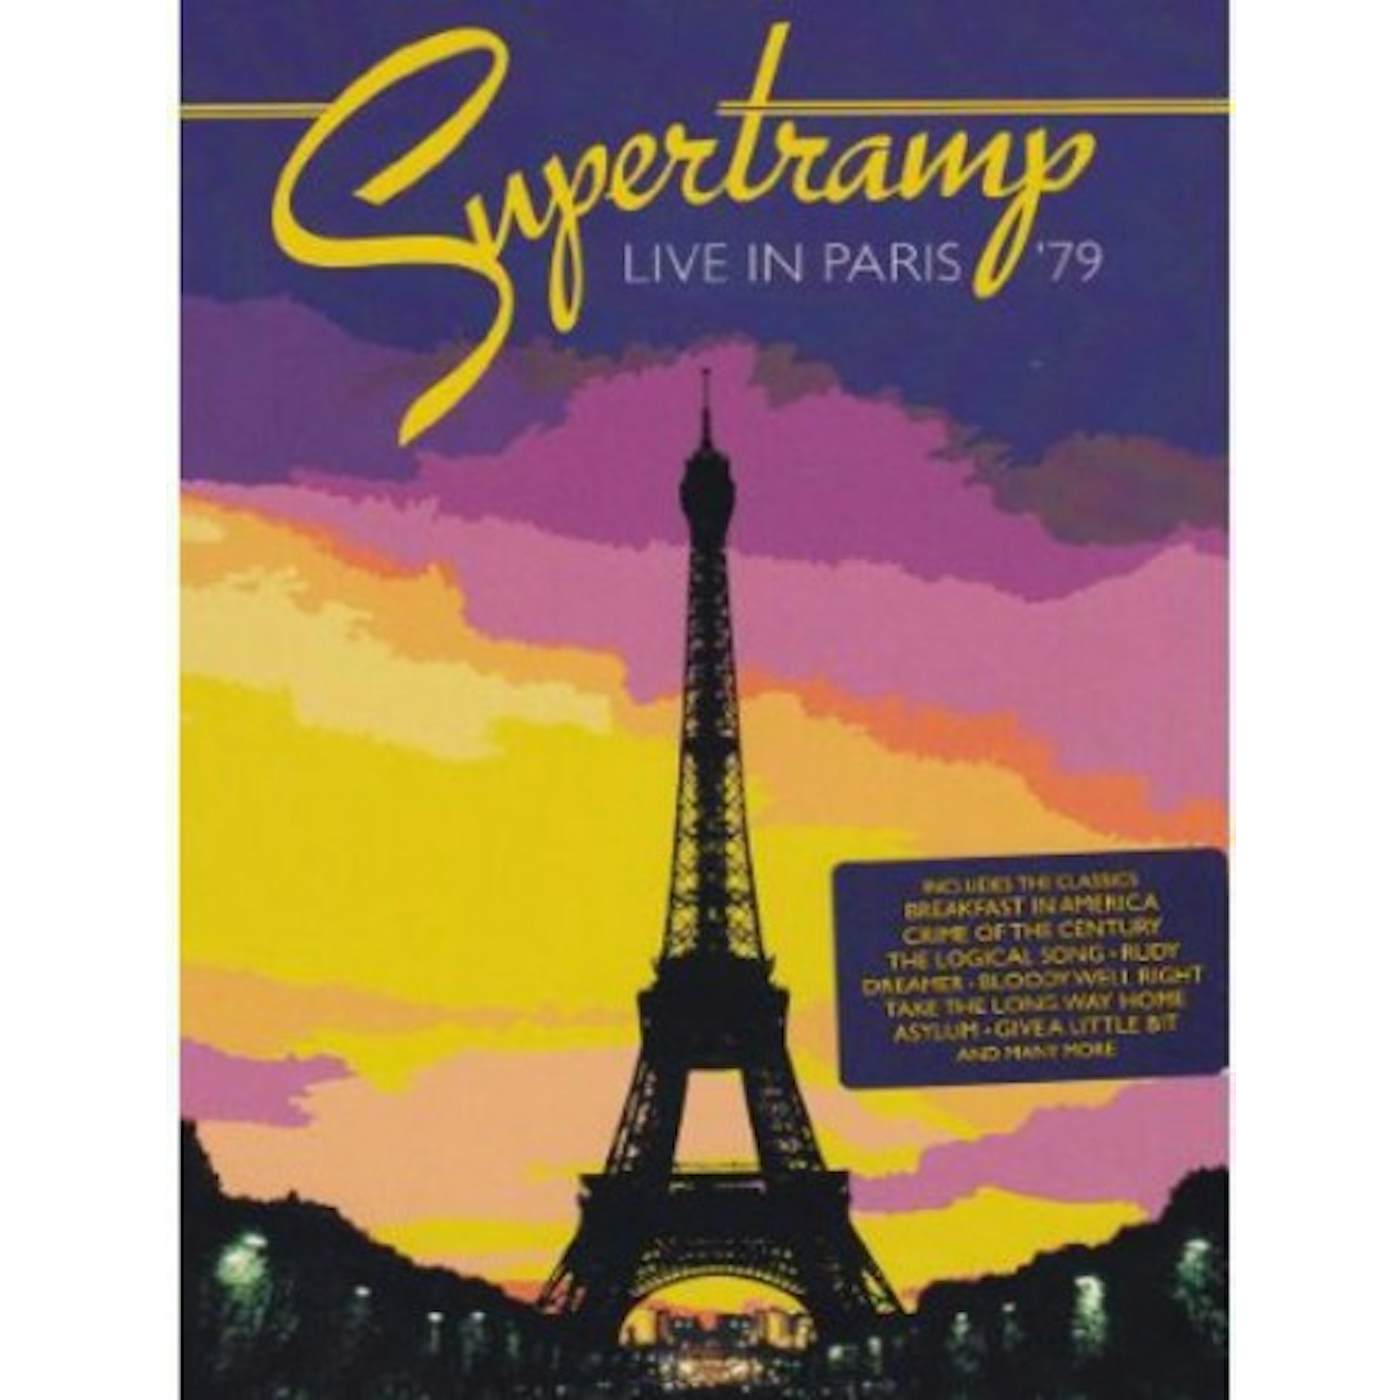 Supertramp LIVE IN PARIS '79 DVD